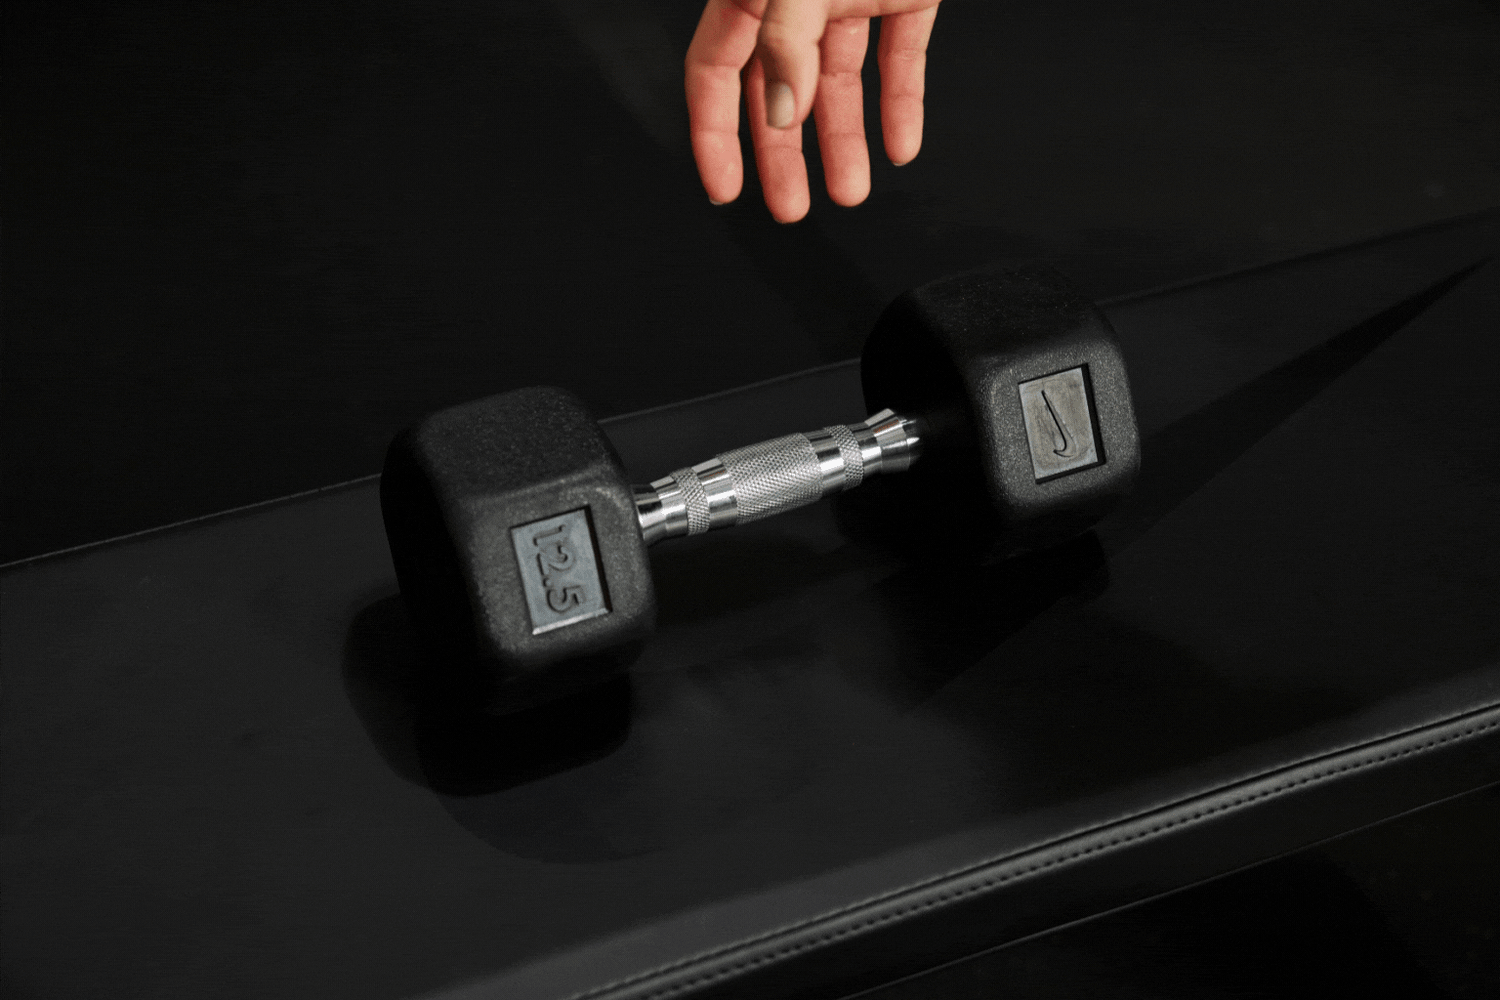 Athlete's hand grabbing the ergonomic handle of the Nike Dumbbell 12.5 LB